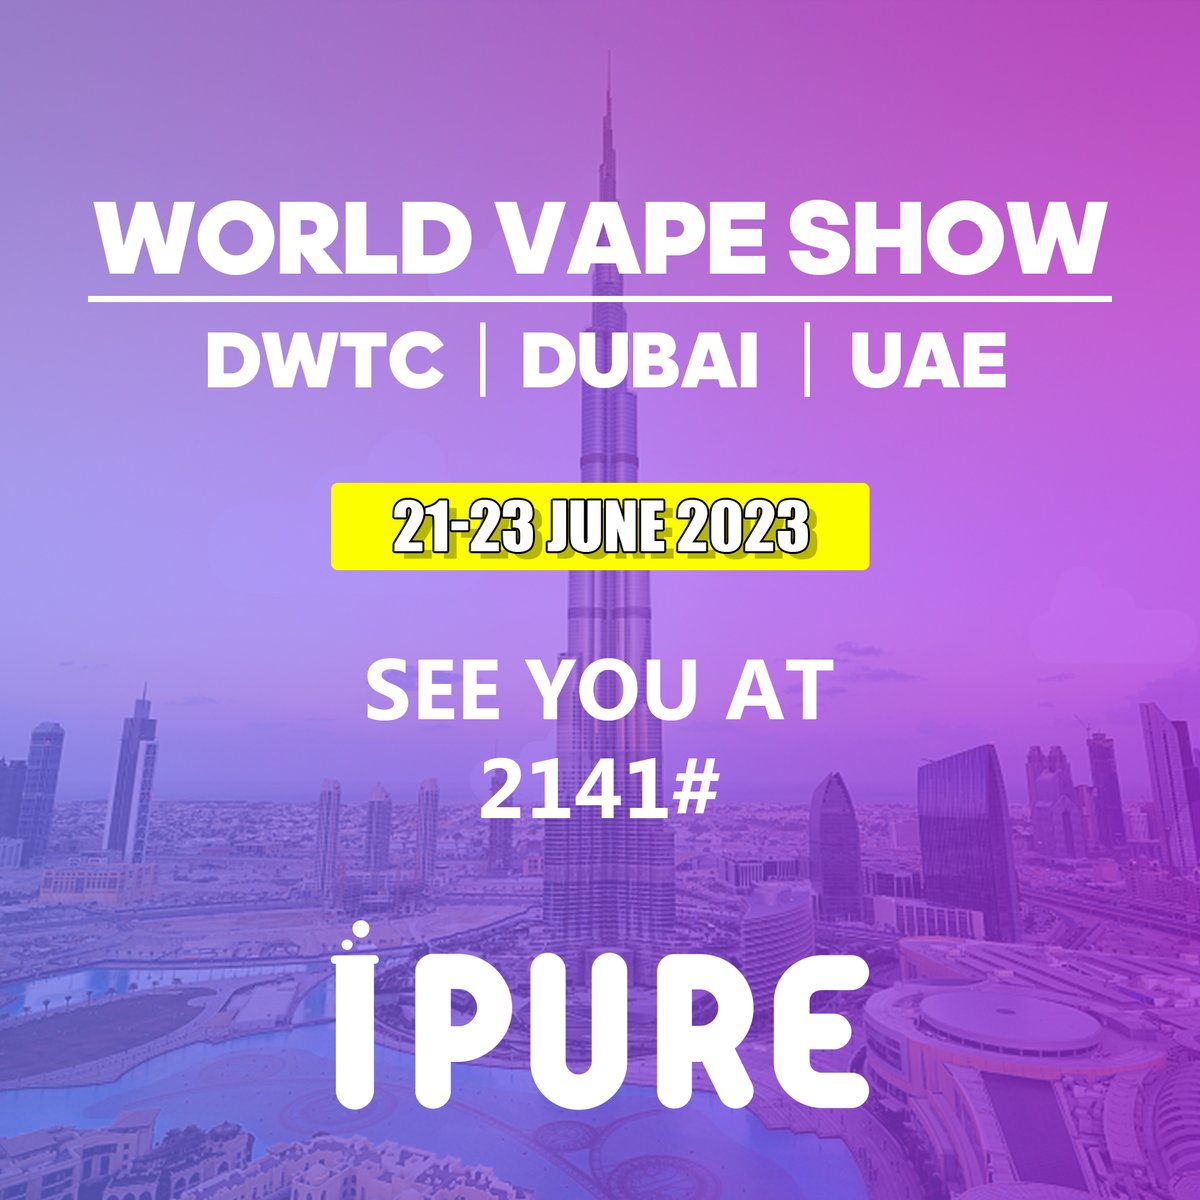 Welcome to visit us at booth no.2141.
World Vape show in Dubai UAE
21-23 June 2023.📷📷
#ipure #Vape #ipurejuice #Eliquid #Ejuice #Flavor #disposable #vapelife #vapecommunity #ecig #ukvia #oem #worldvapeshow #wvsdubai23 #wvs #vapeindustry #wvsdubai #vapeuae #uaevapers